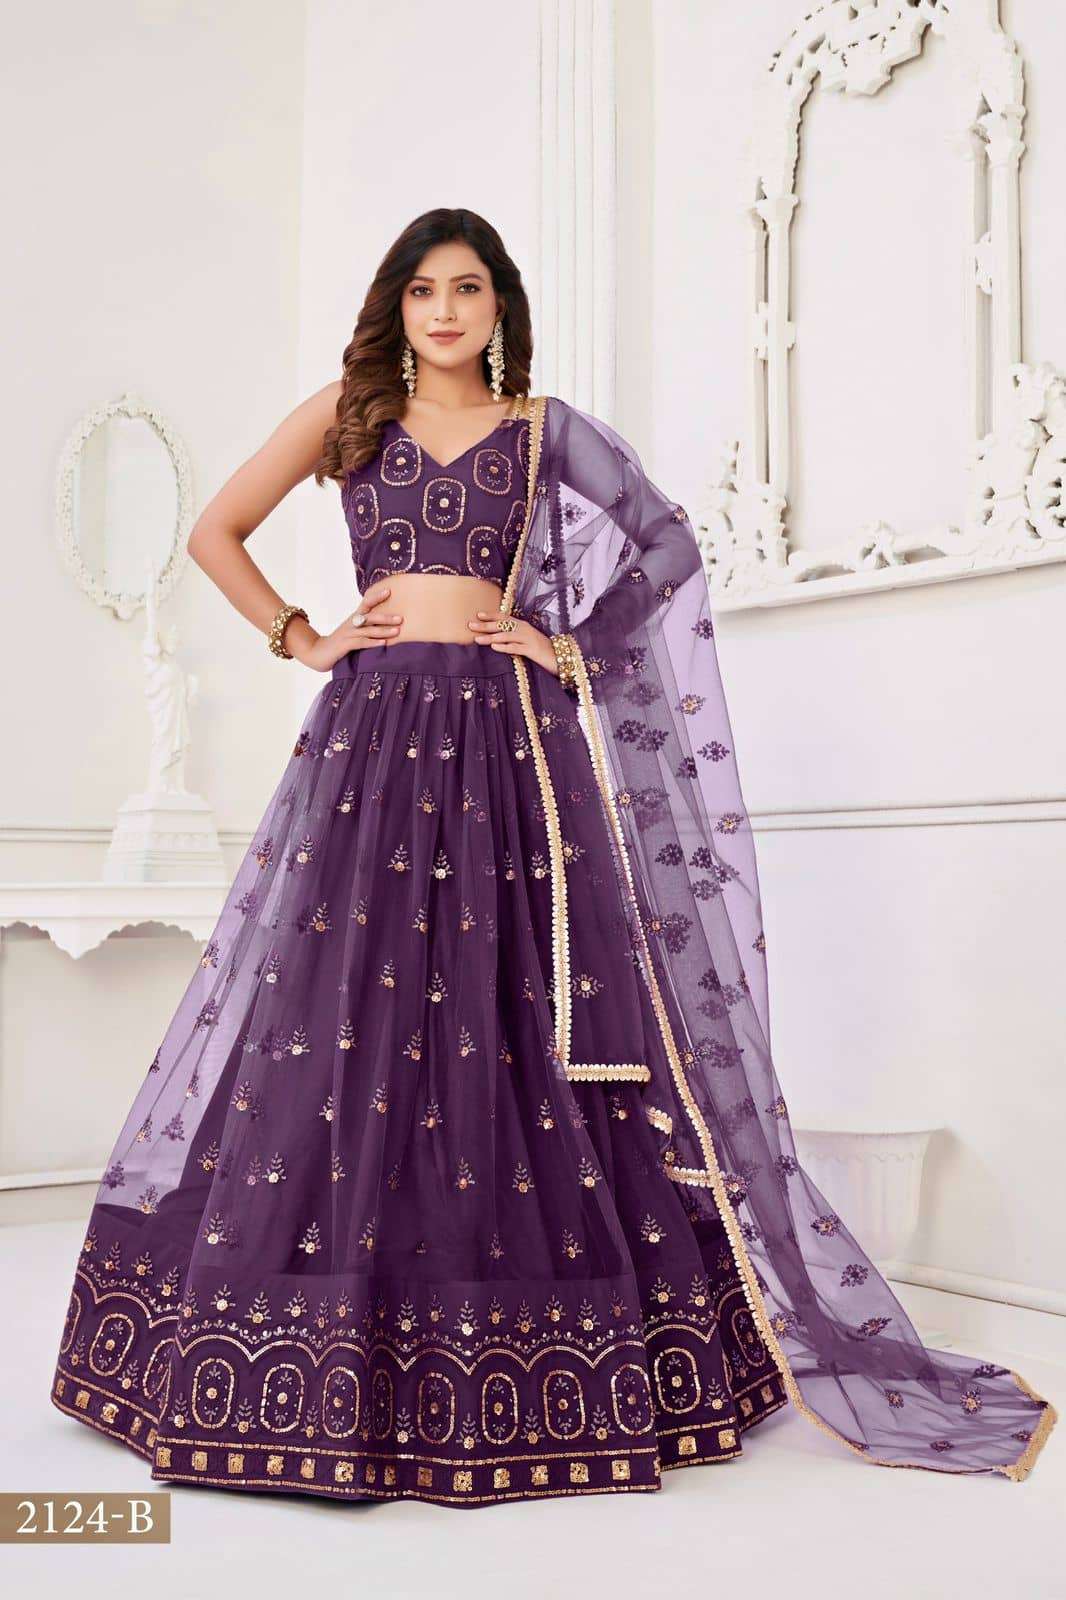 Narayani Fashion Kelaya Vol 5 naylon net with designer wedding Special lehenga choli collection at best rate